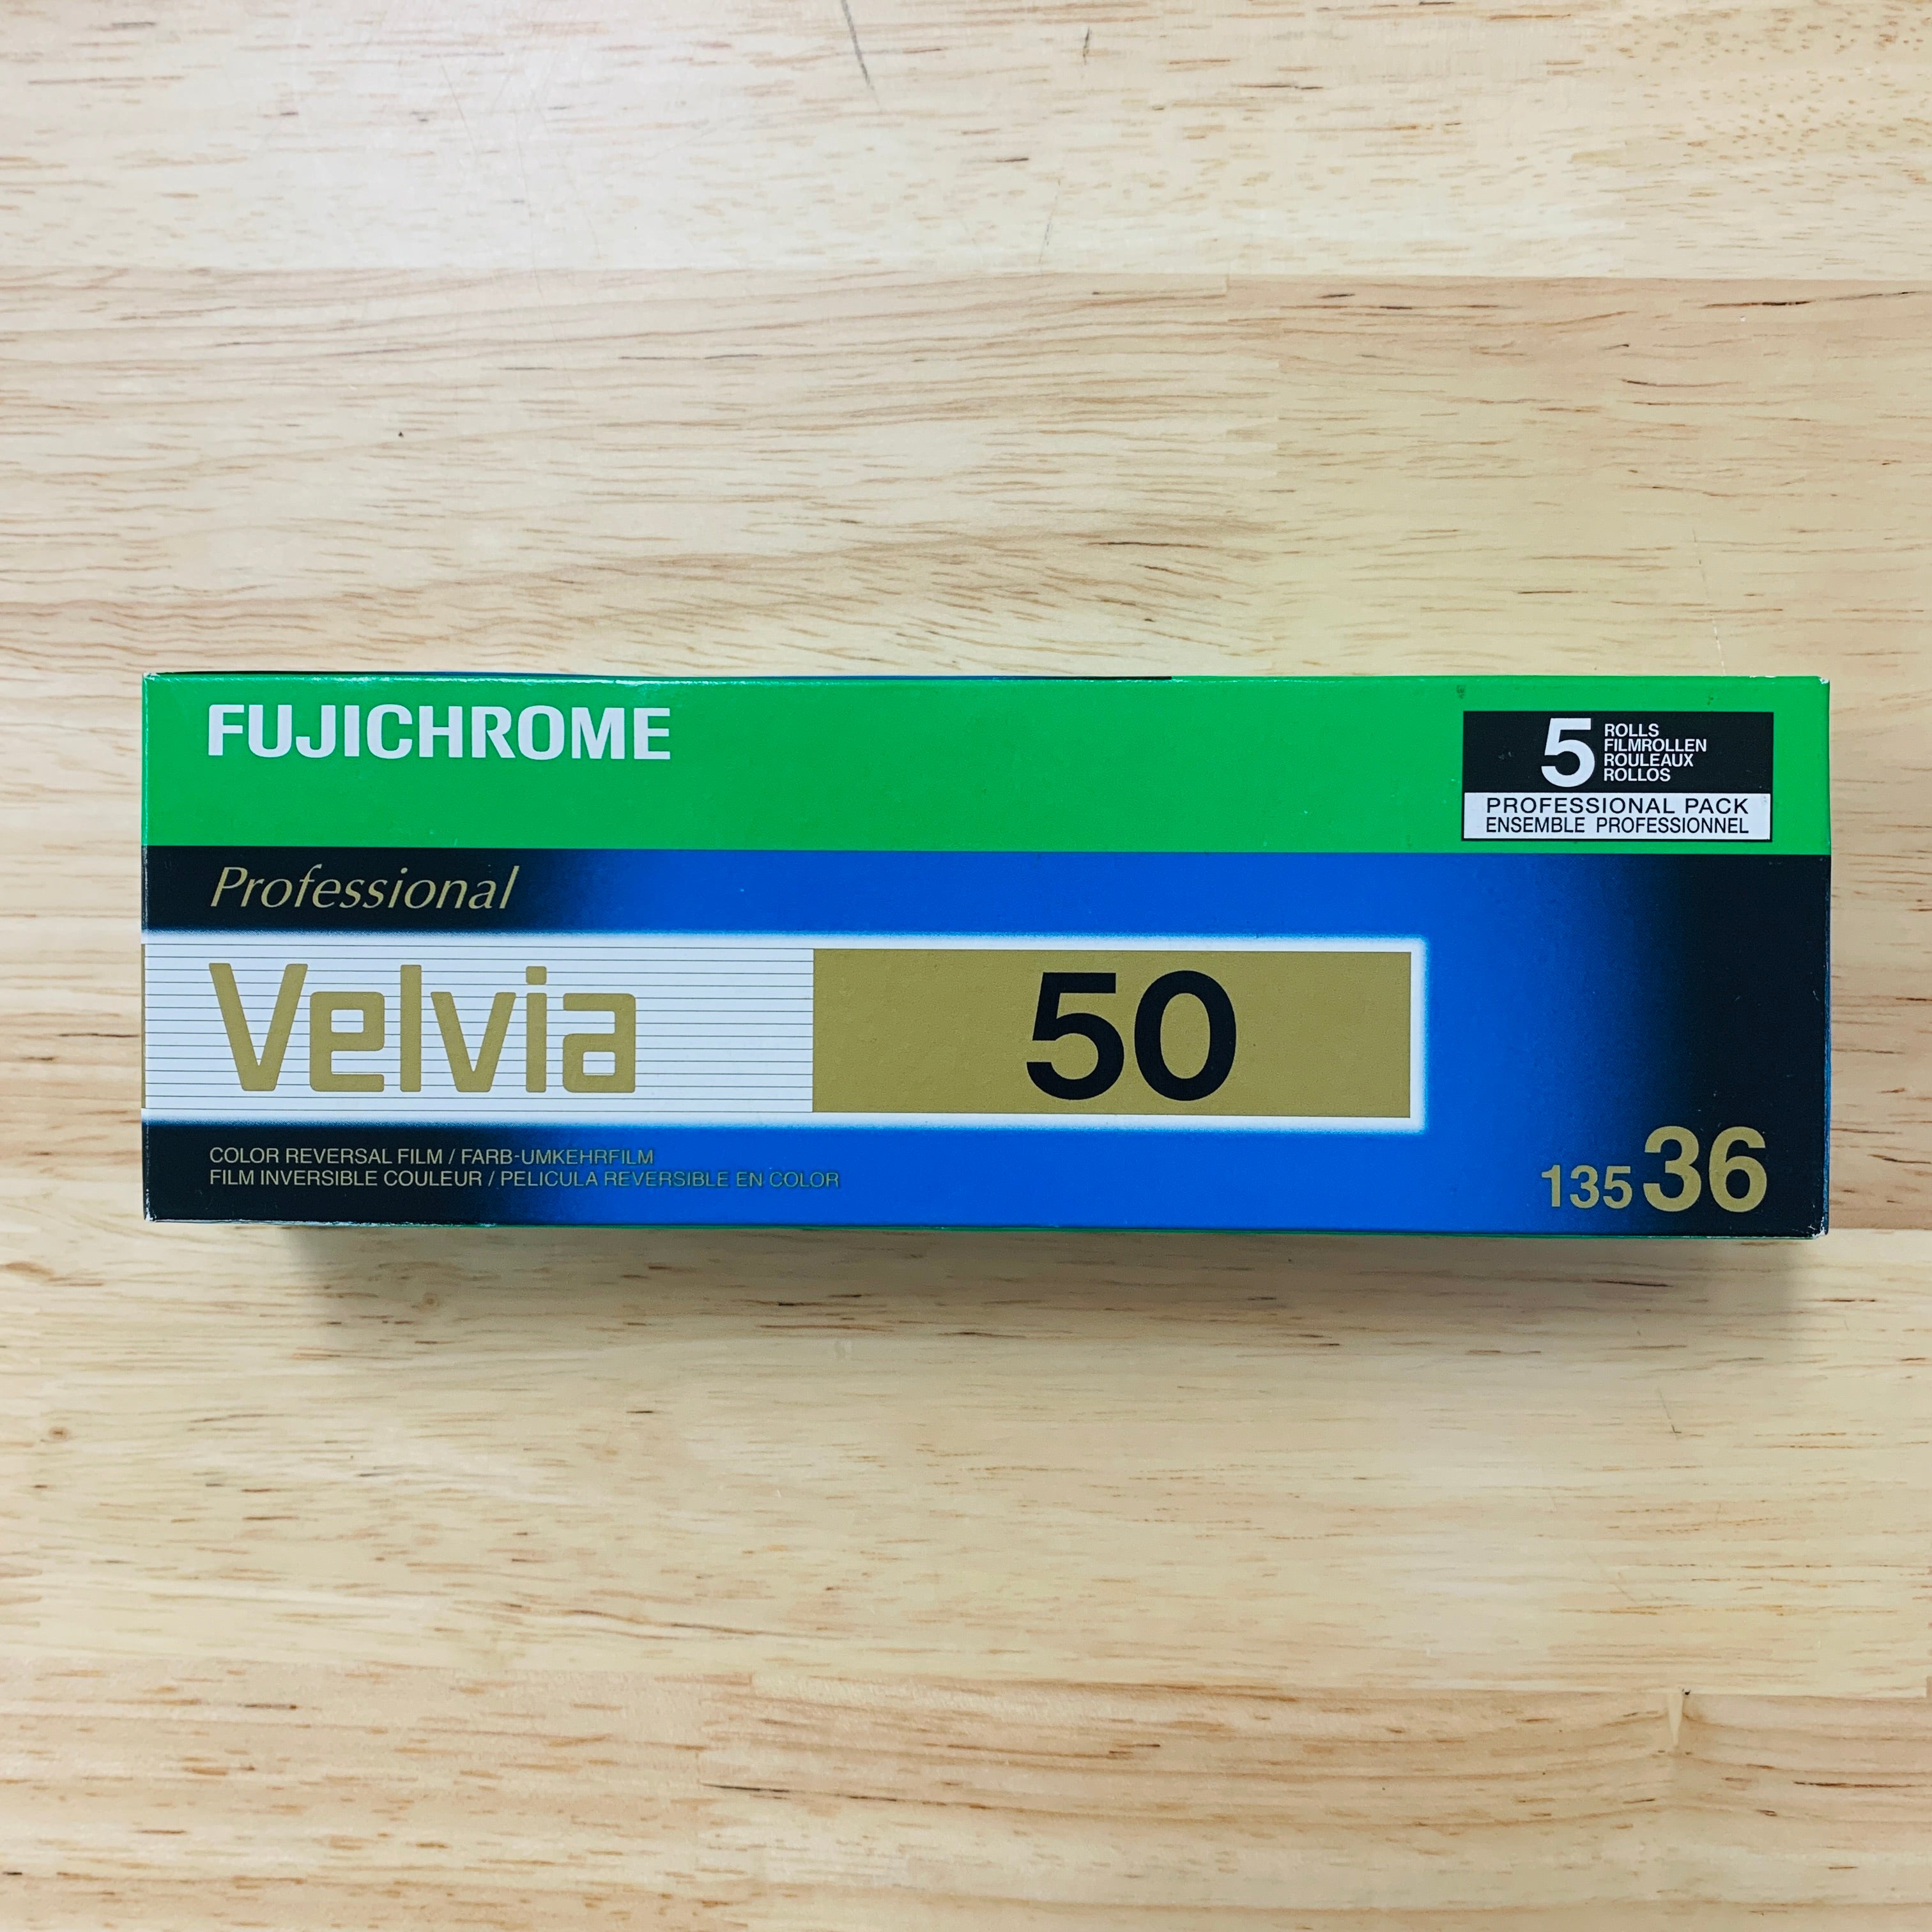 Fuji Pro Velvia 50 (5 Rolls) 35mm Film - Expired 2018-03 - Refrigerated